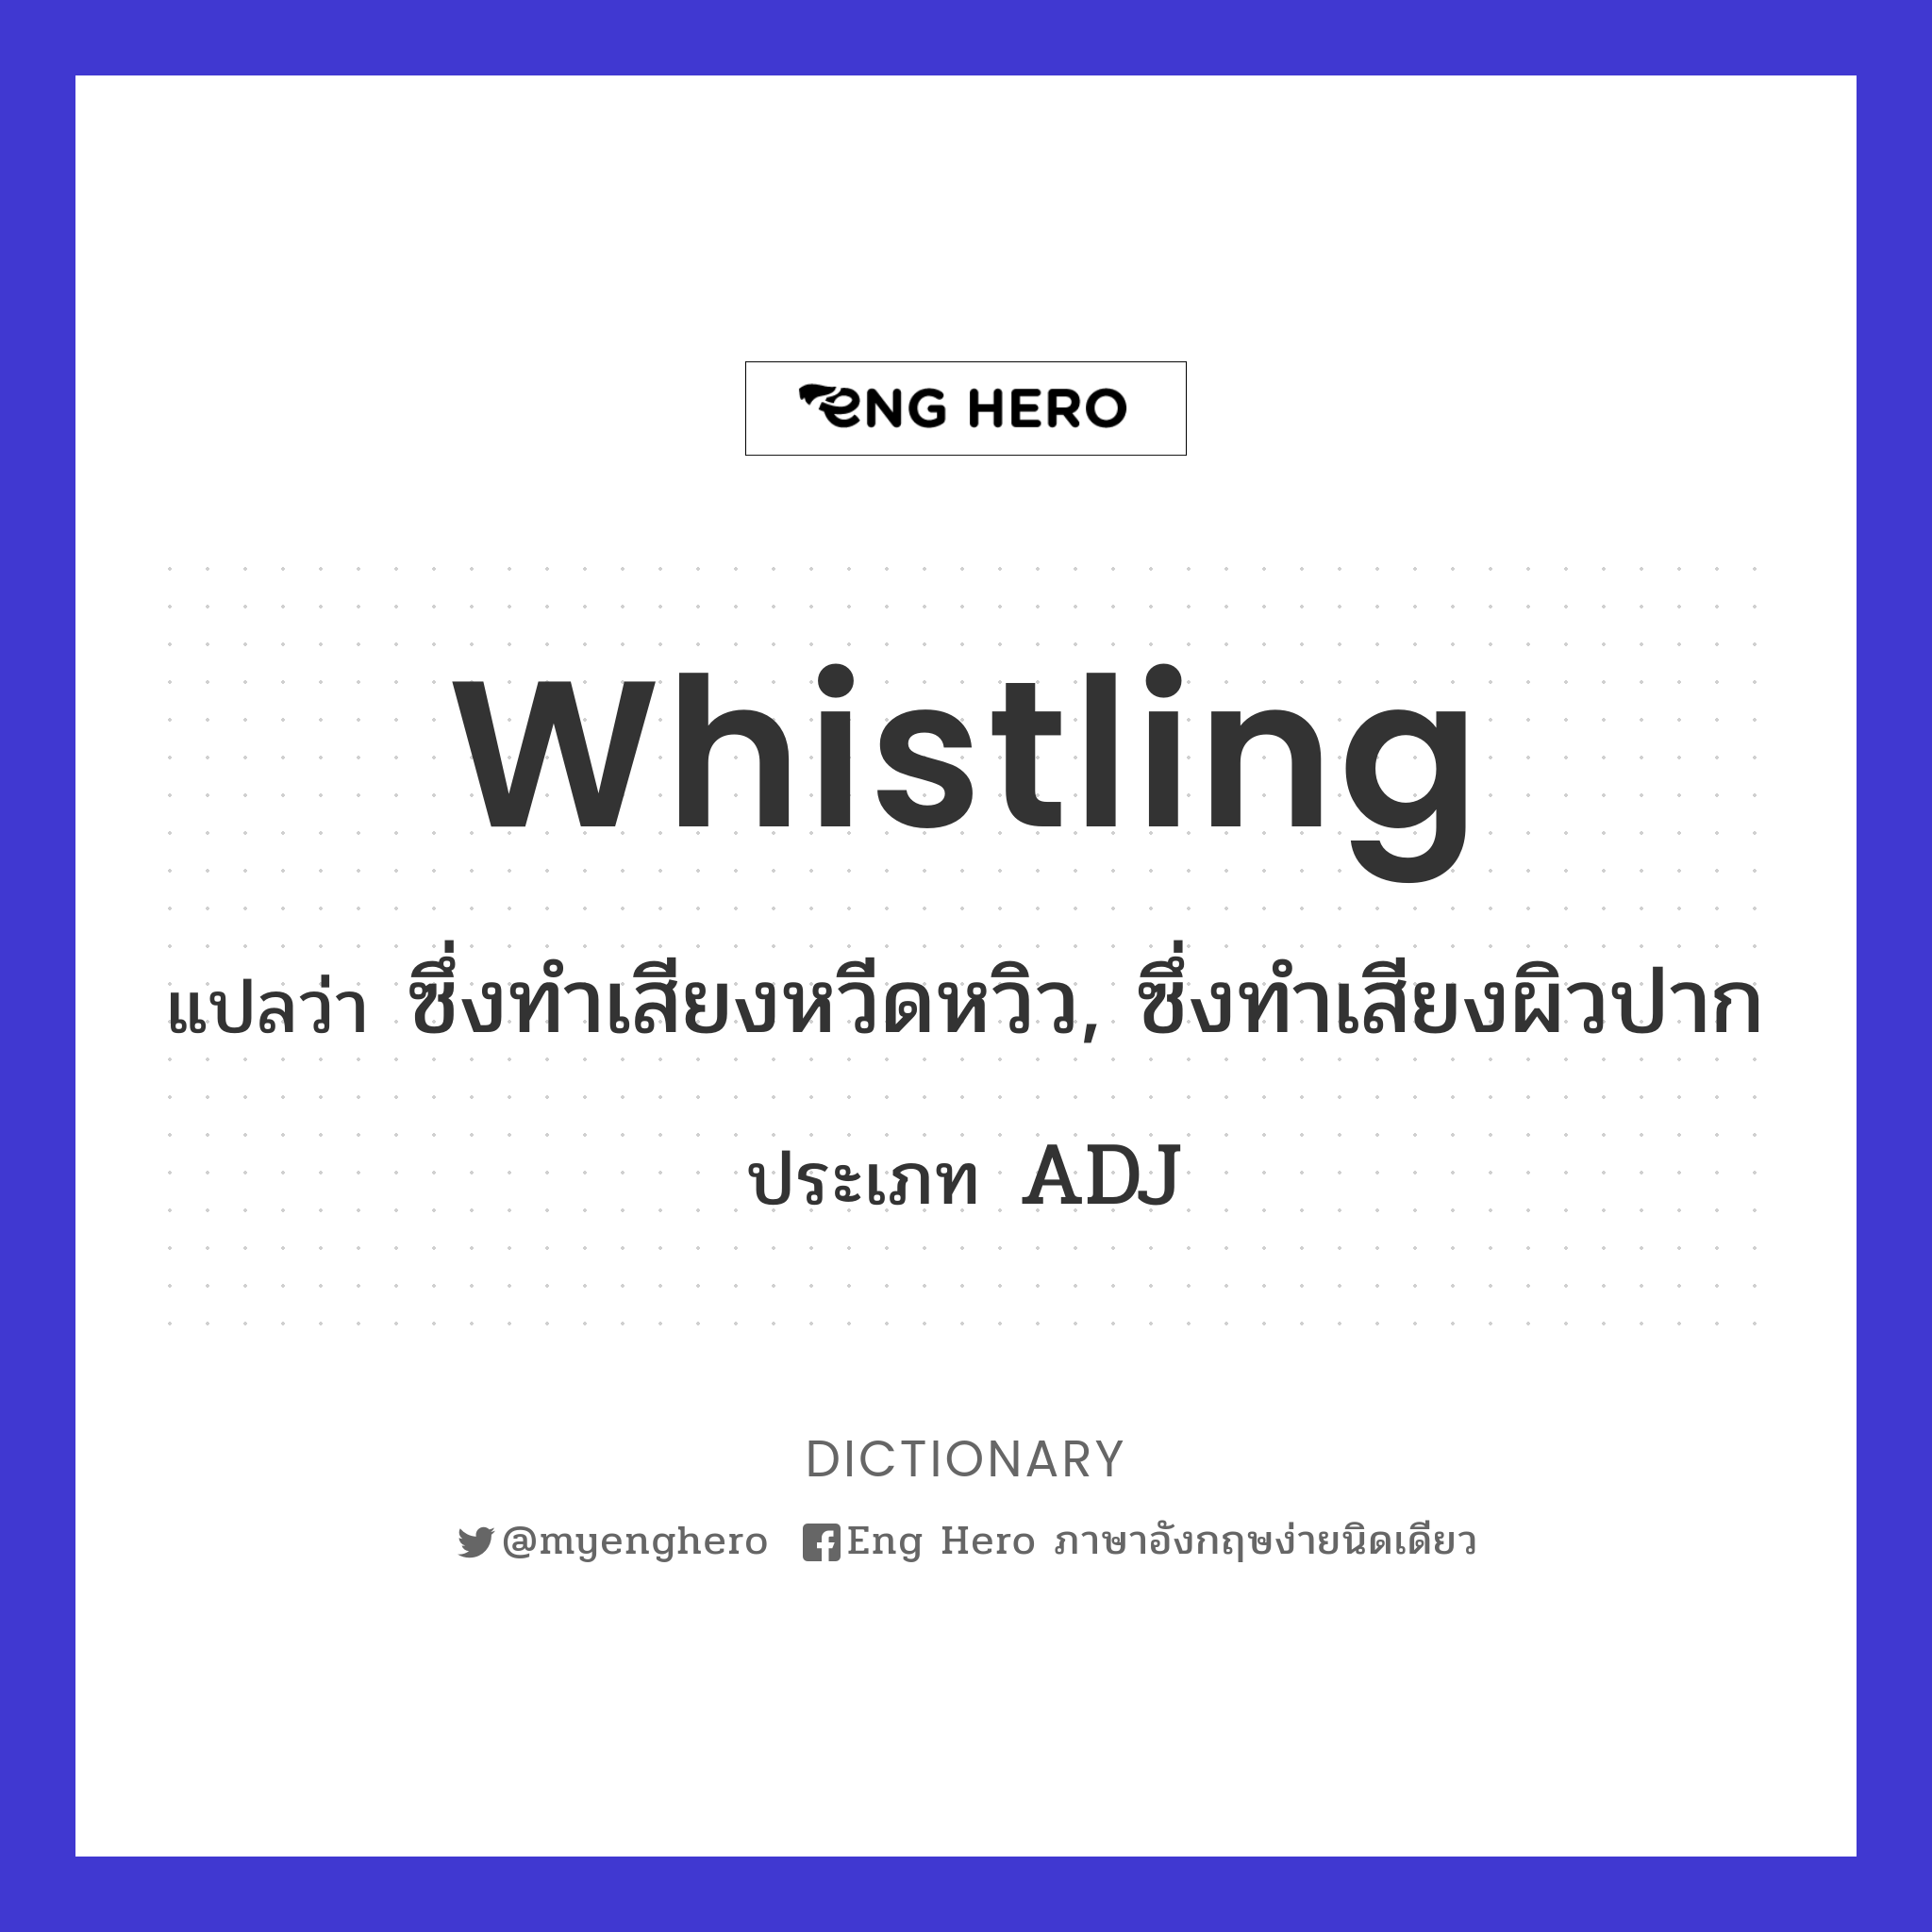 whistling